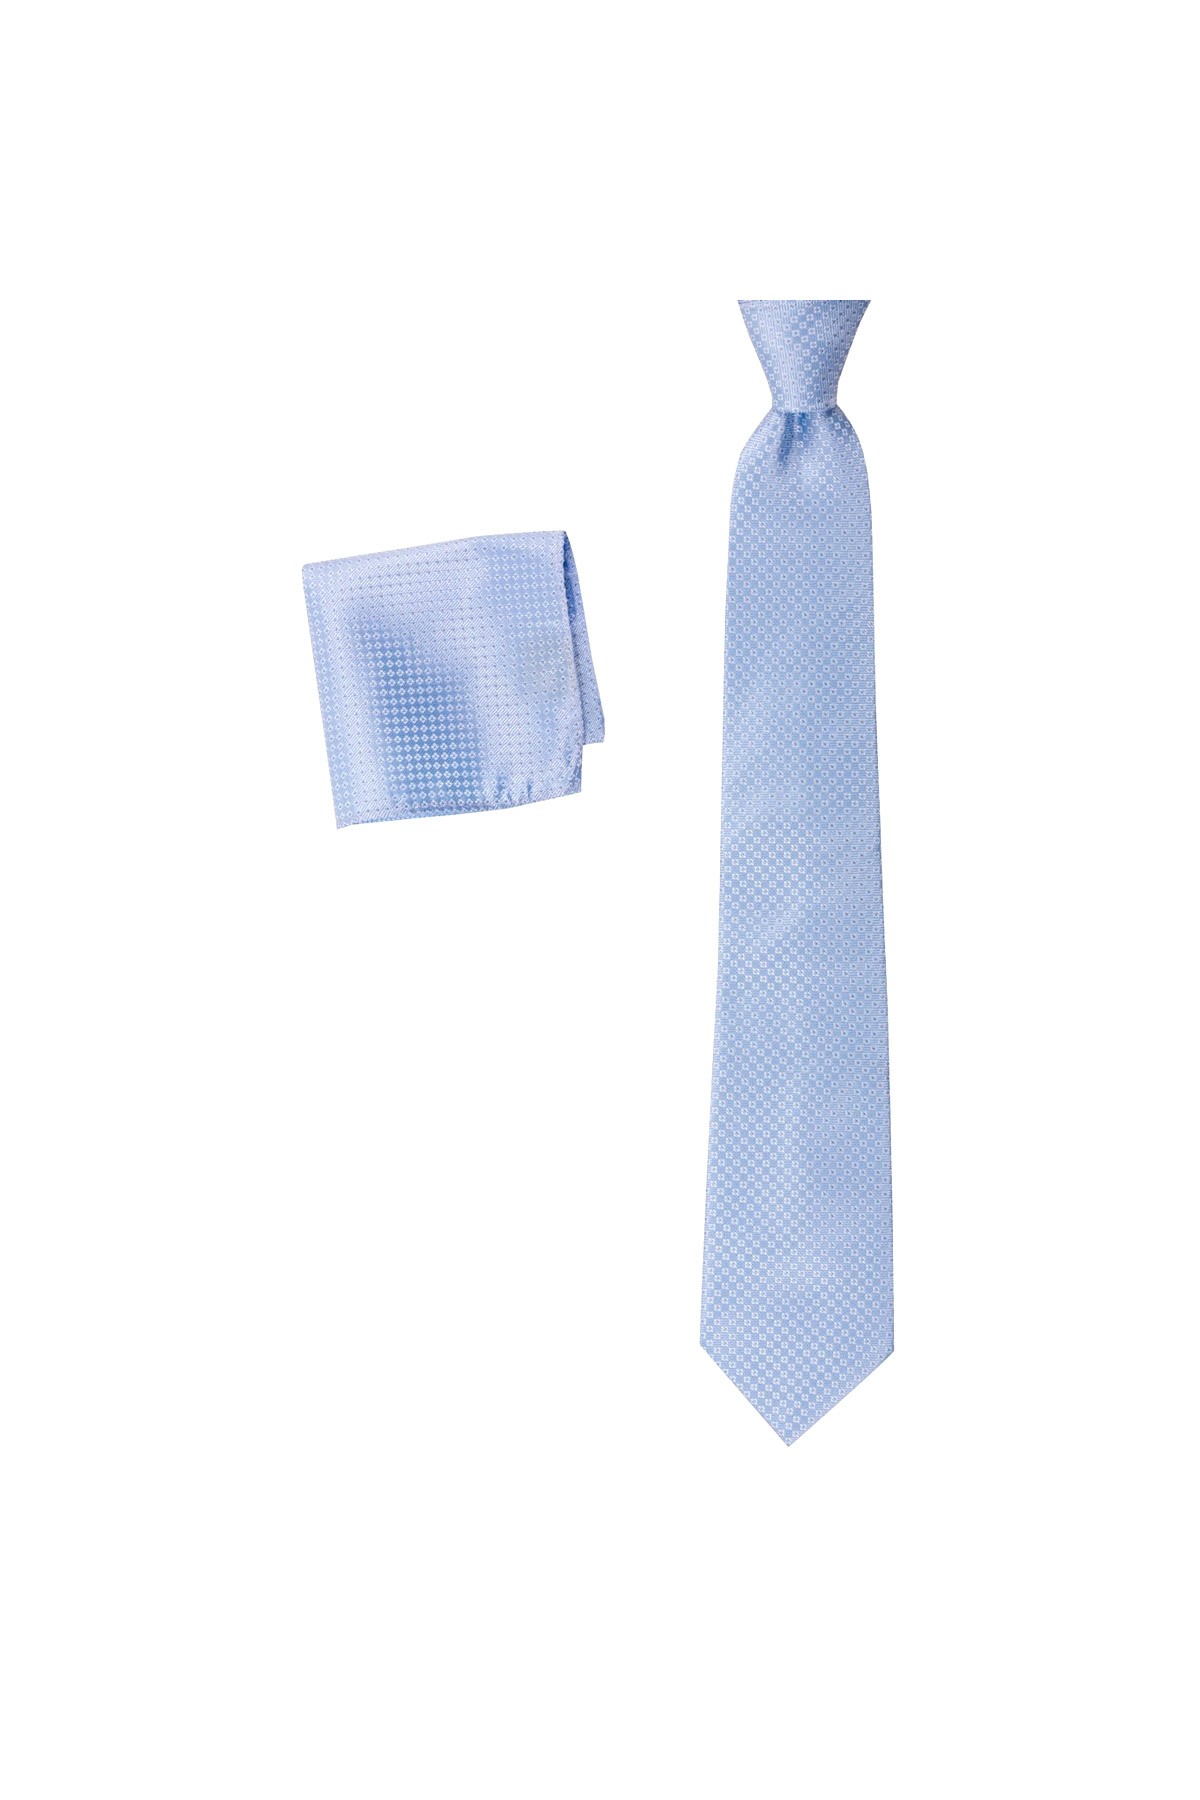 Düz renkli 8 cm genişliğinde mendilli kravat